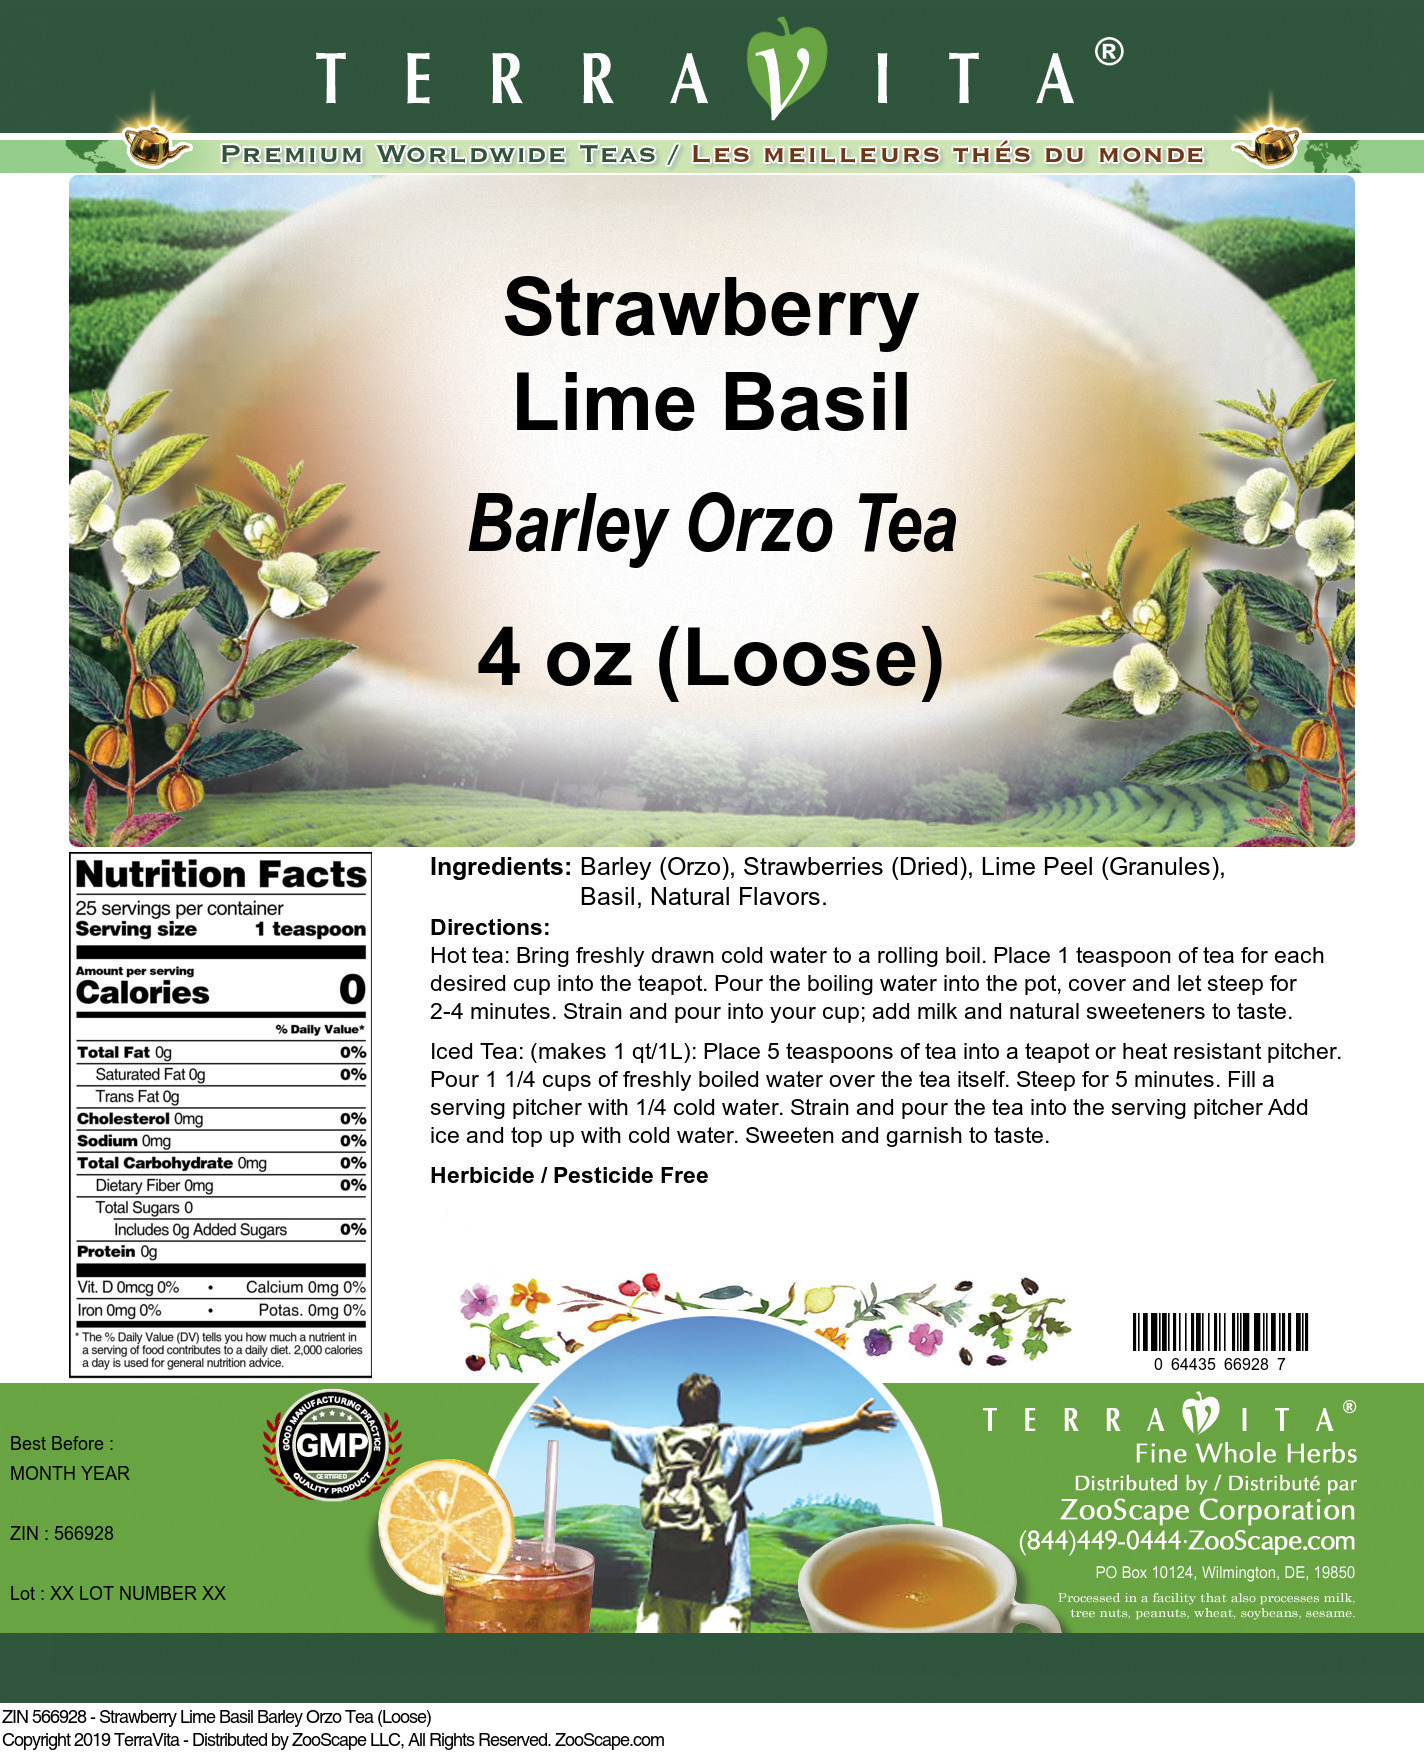 Strawberry Lime Basil Barley Orzo Tea (Loose) - Label